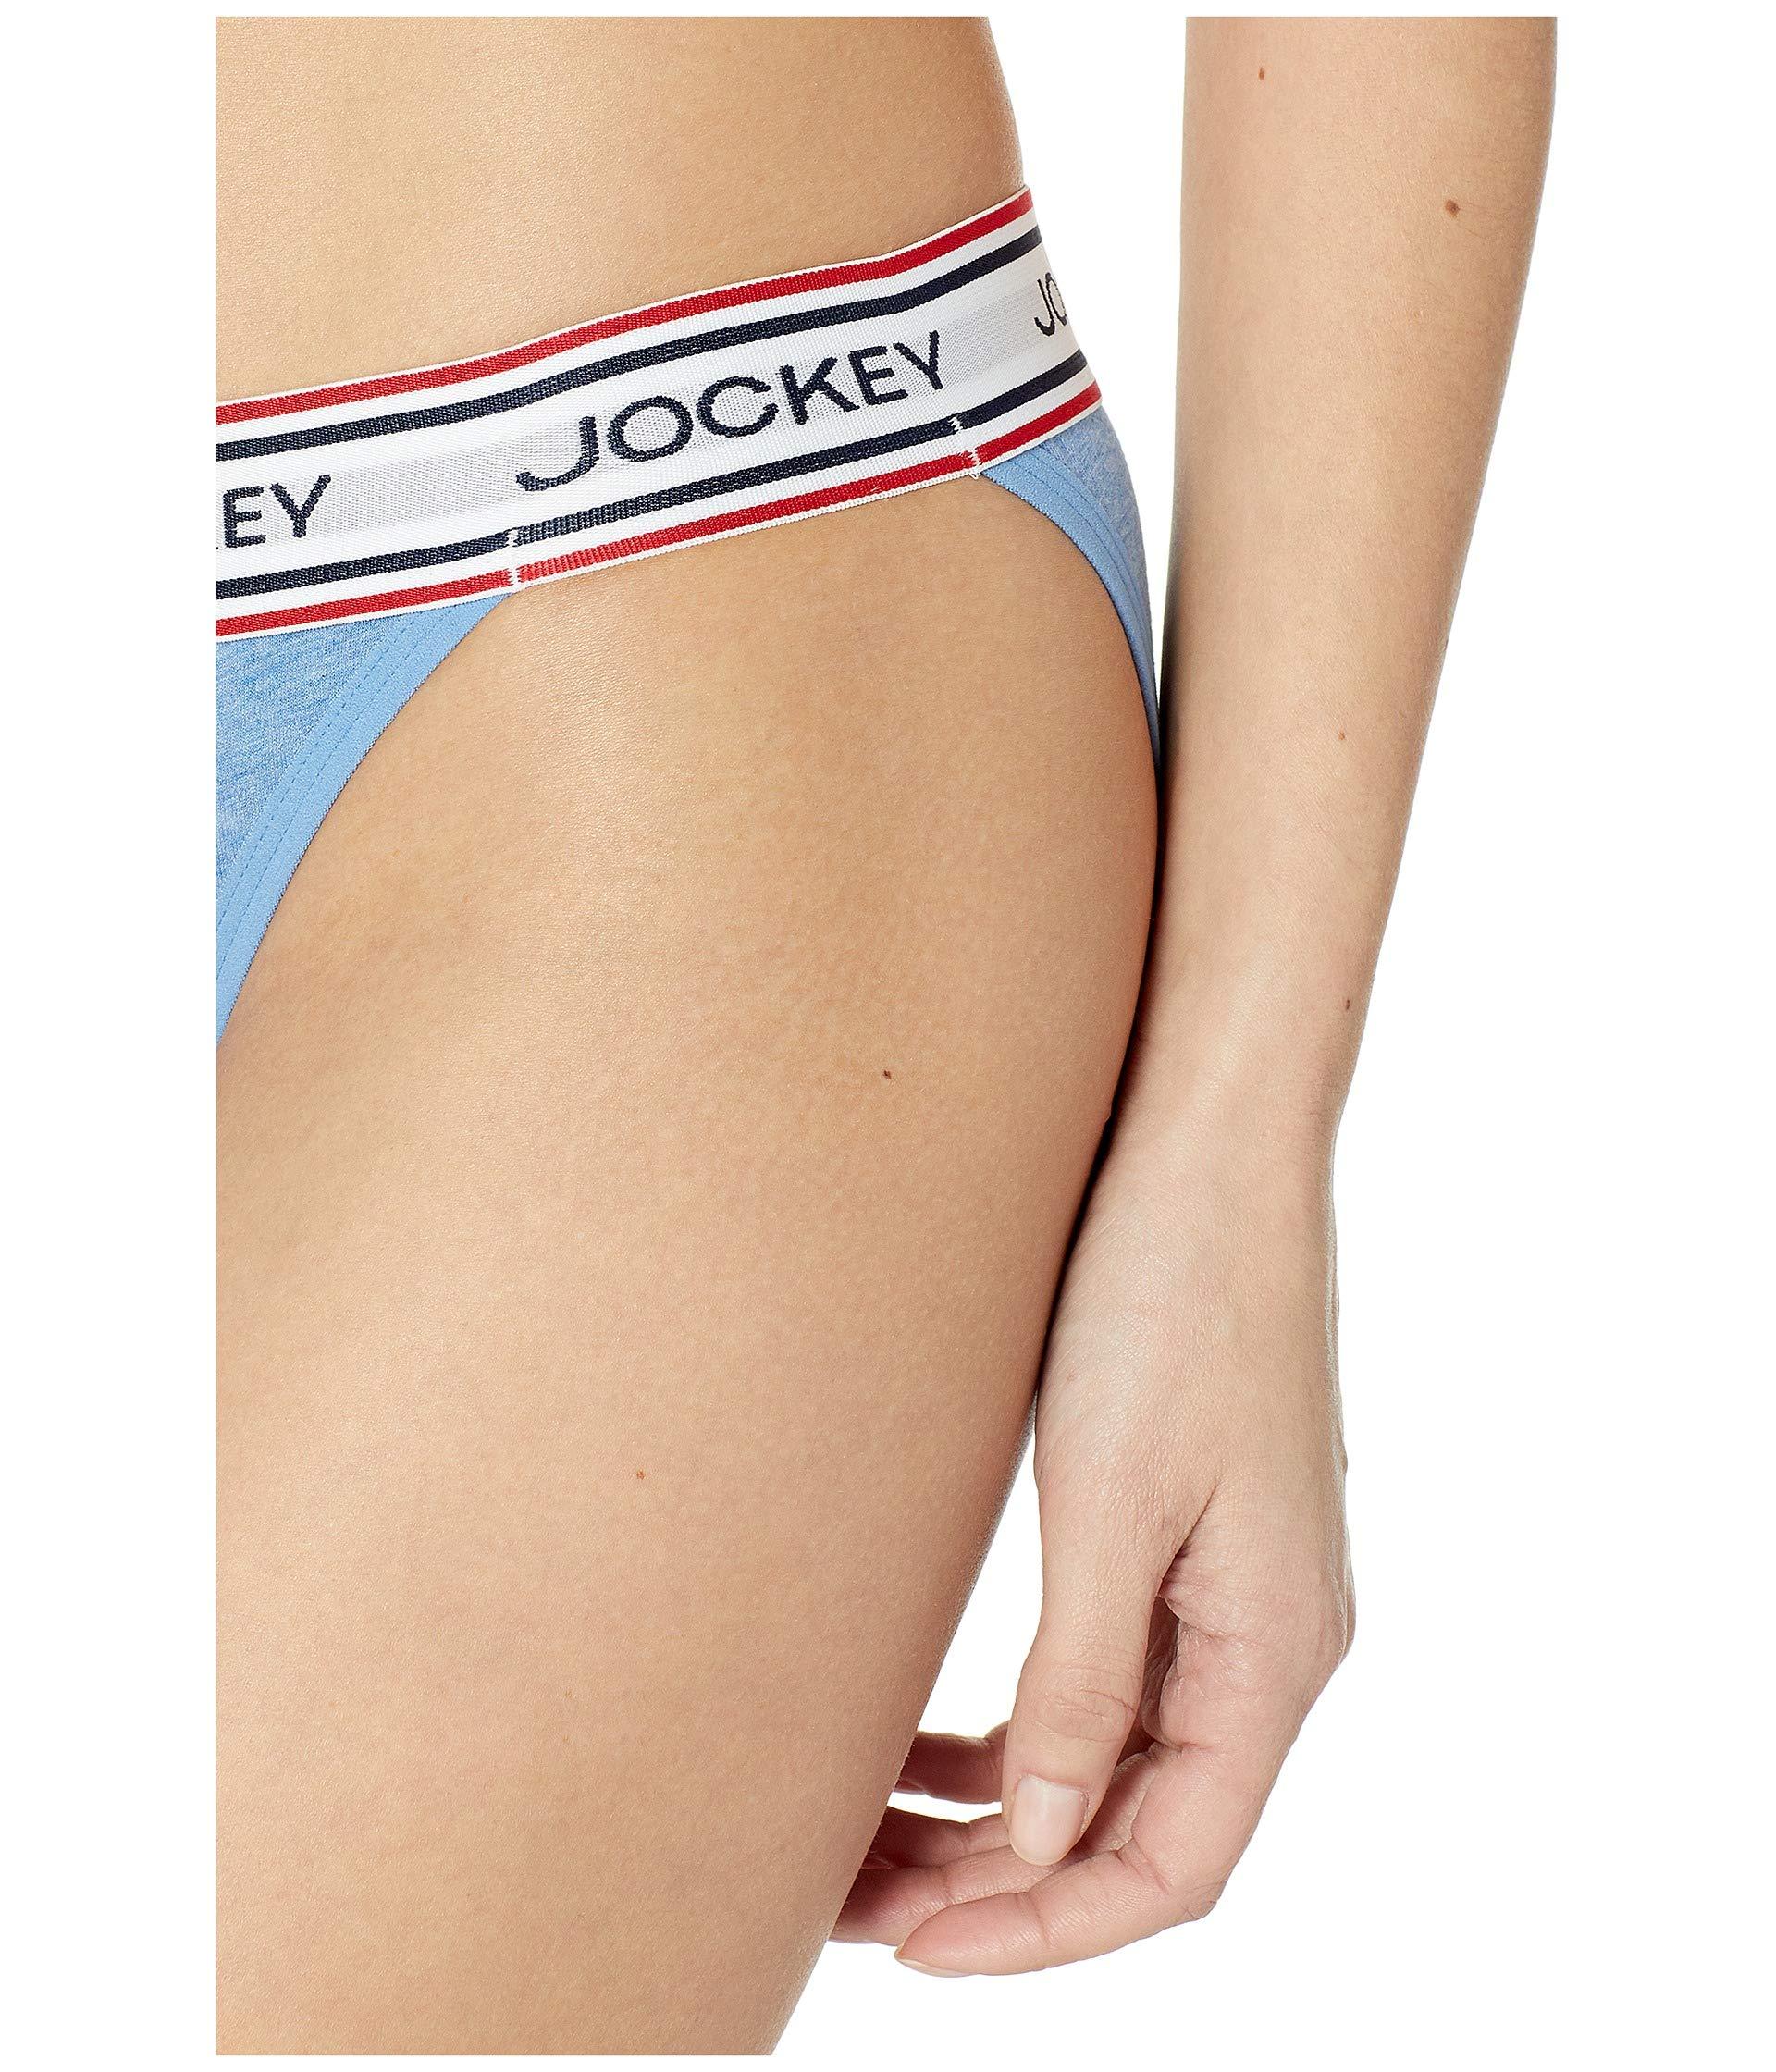 https://cdna.lystit.com/photos/zappos/960b8478/jockey-French-Blue-Heather-Retro-Stripe-String-Bikini-stone-Washed-Floral-Womens-Underwear.jpeg